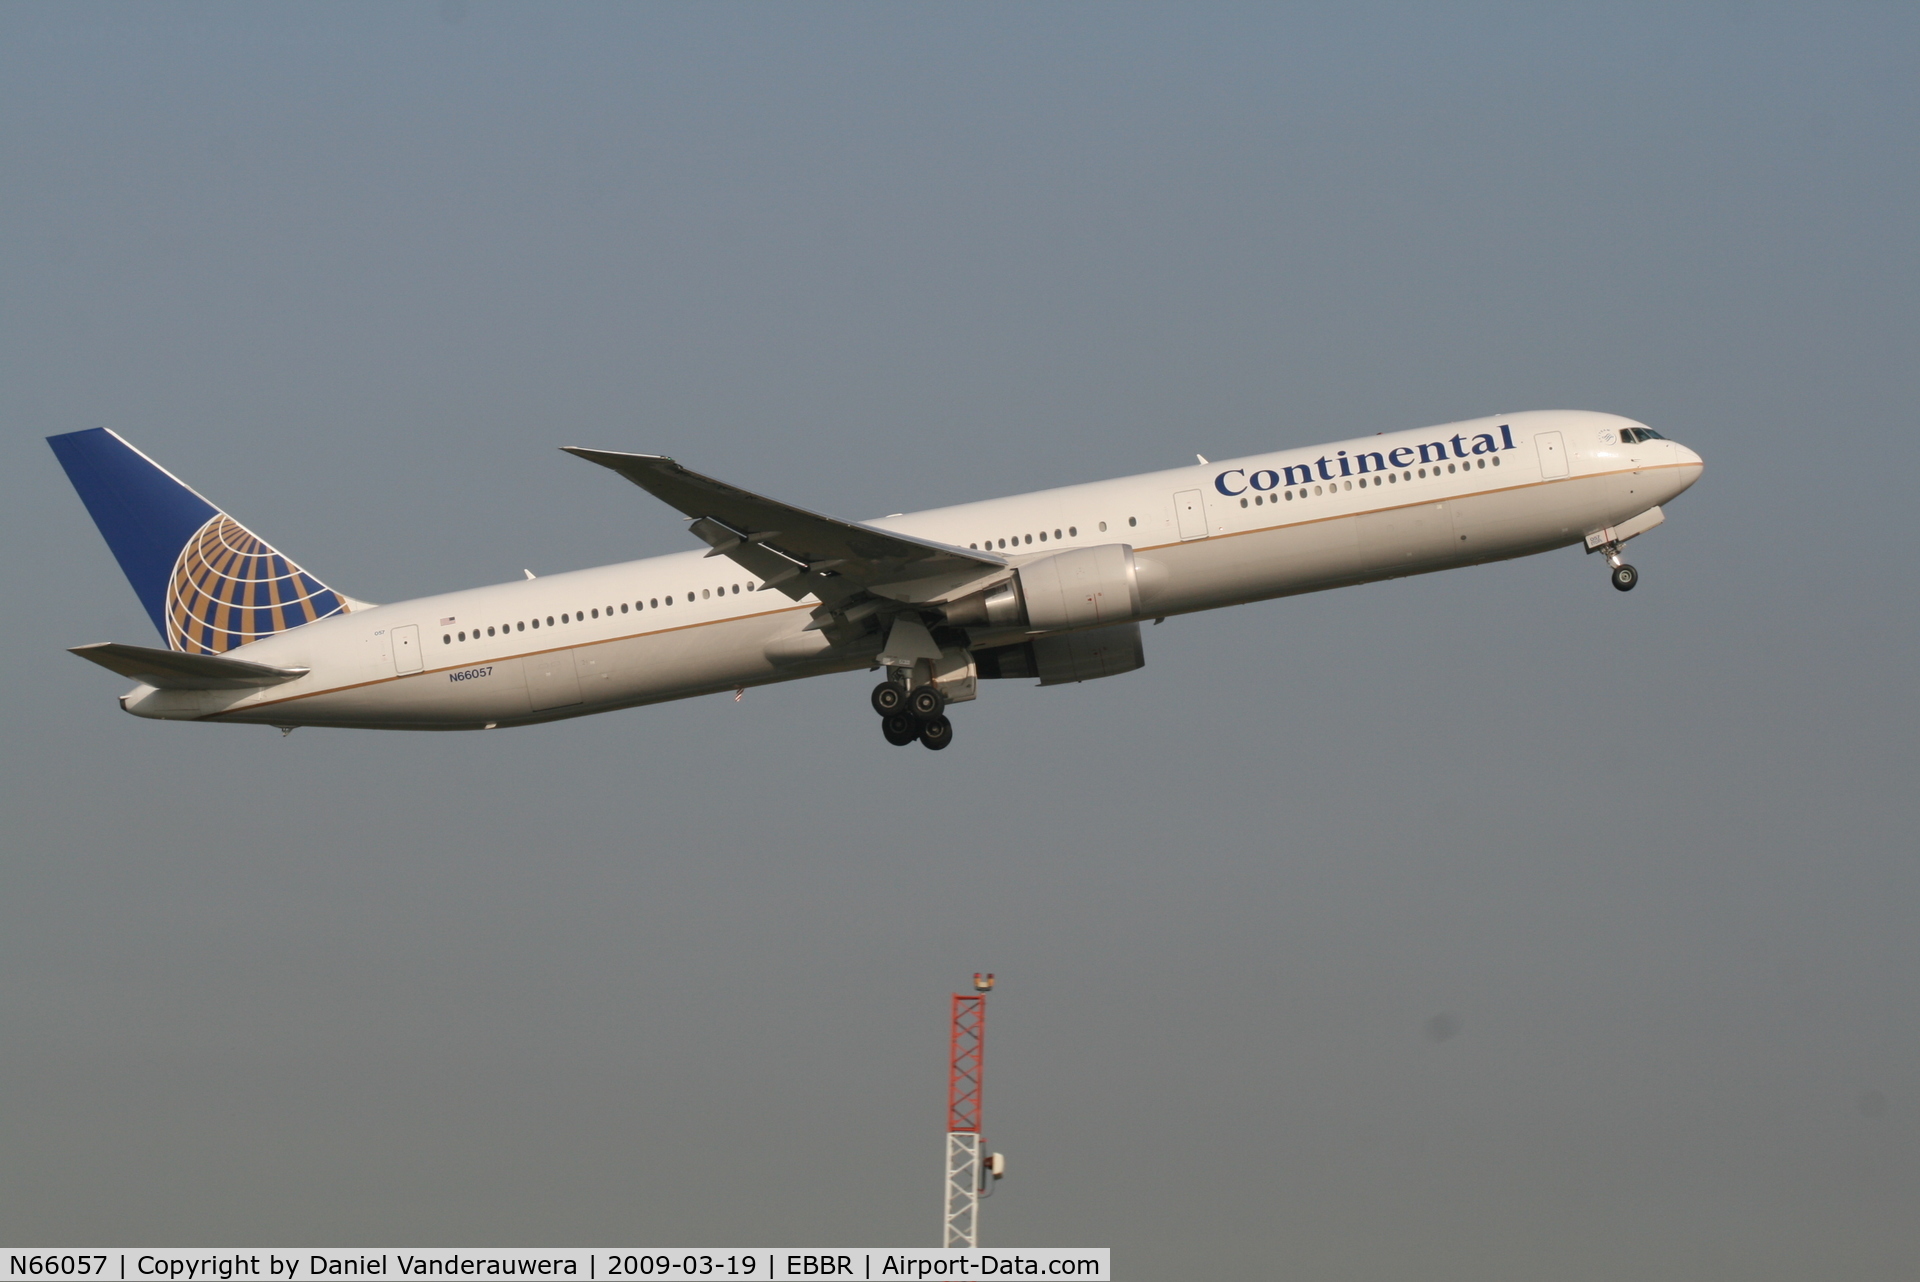 N66057, 2002 Boeing 767-424/ER C/N 29452, Flight CO061 is taking off from RWY 07R